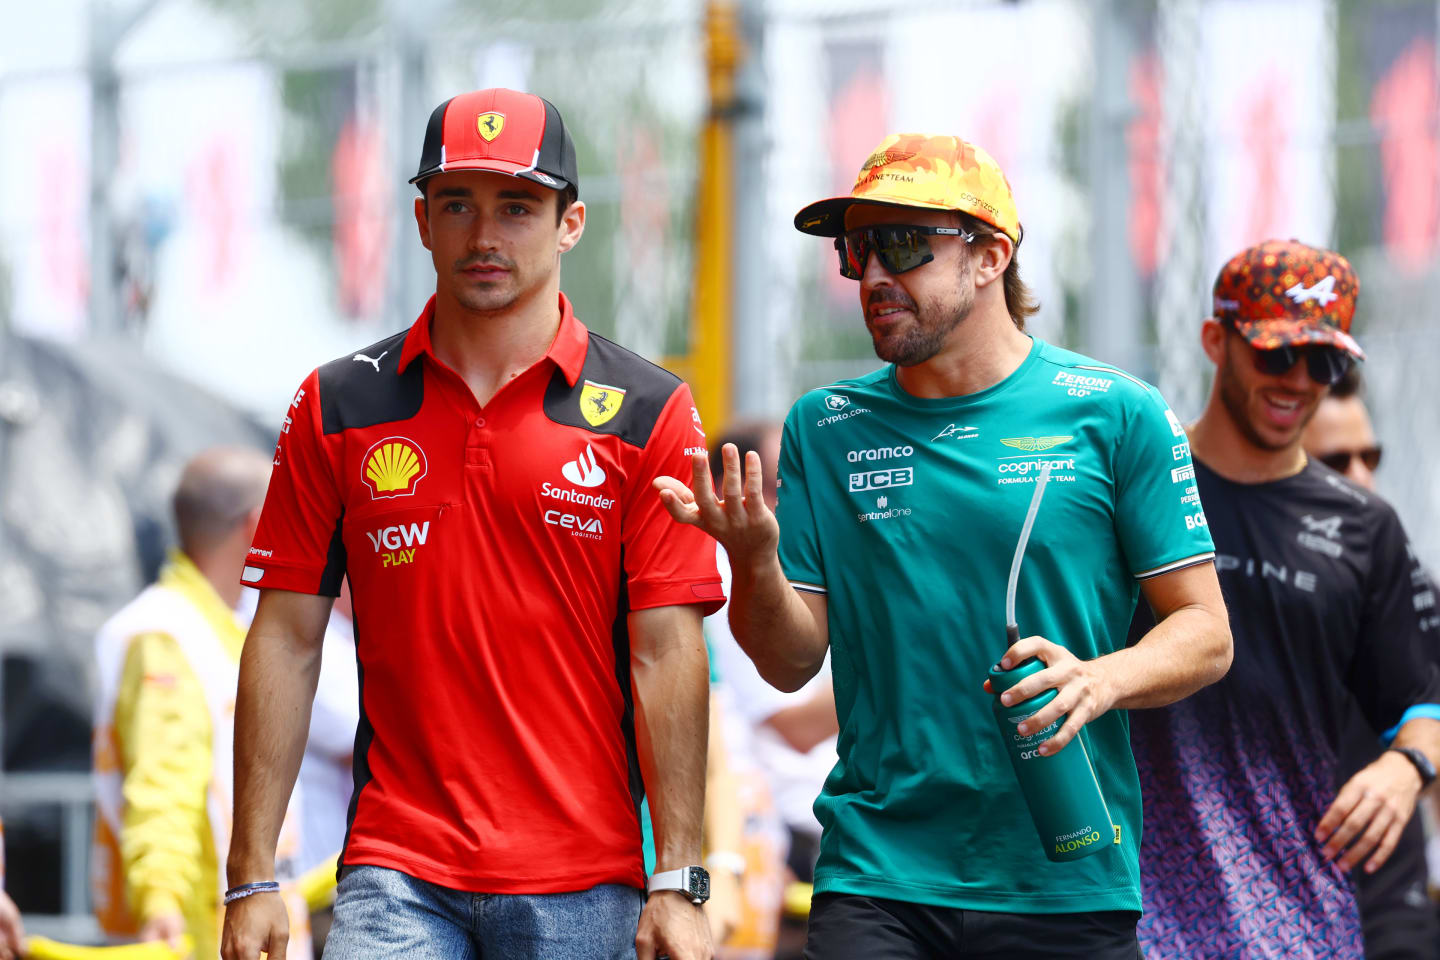 BARCELONA, SPAIN - JUNE 04: Charles Leclerc of Monaco and Ferrari talks with Fernando Alonso of